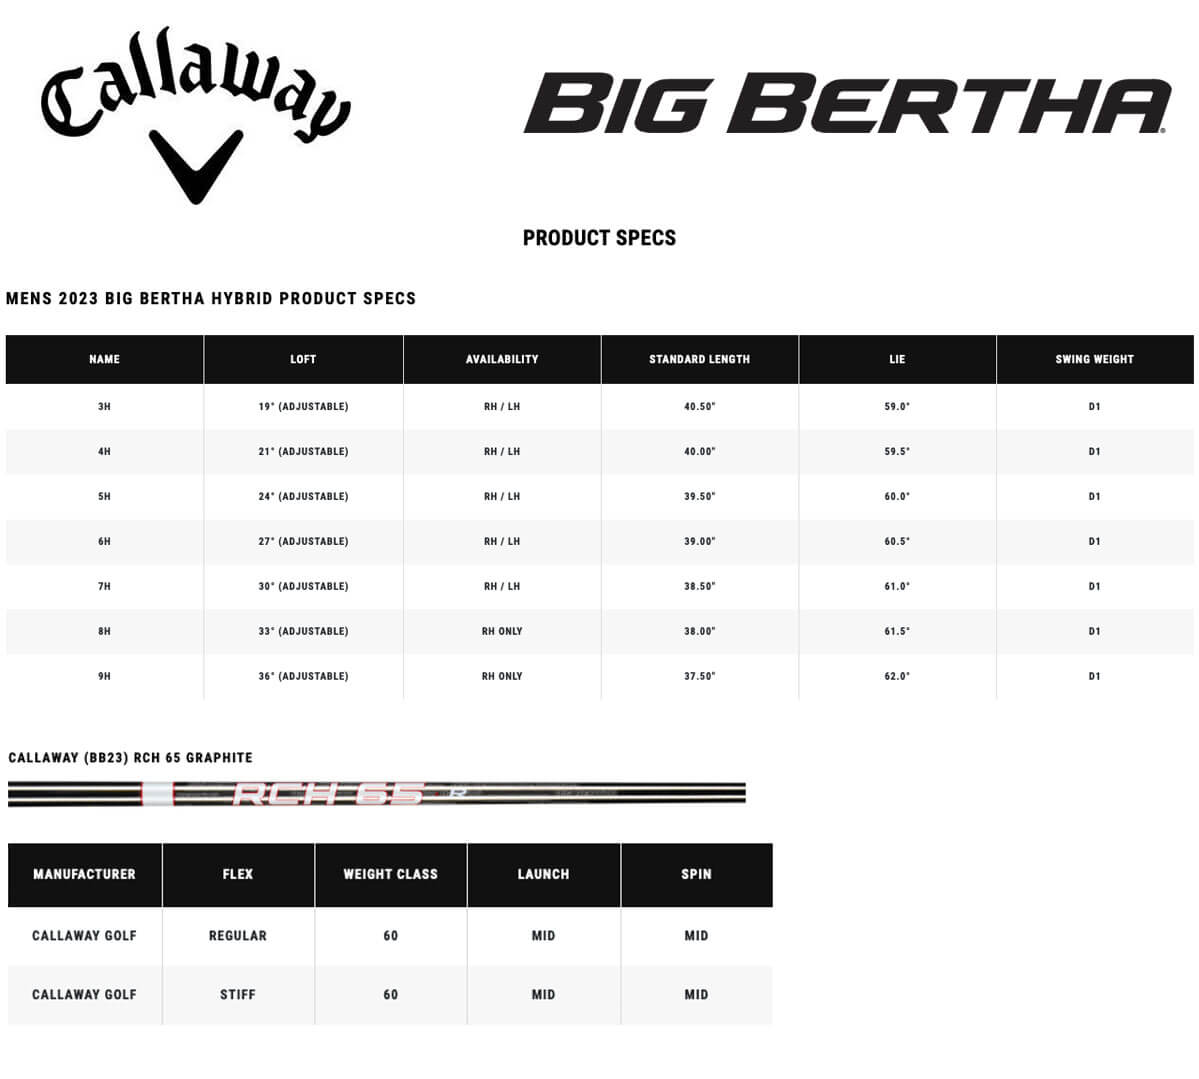 Specification for Callaway Big Bertha Hybrid